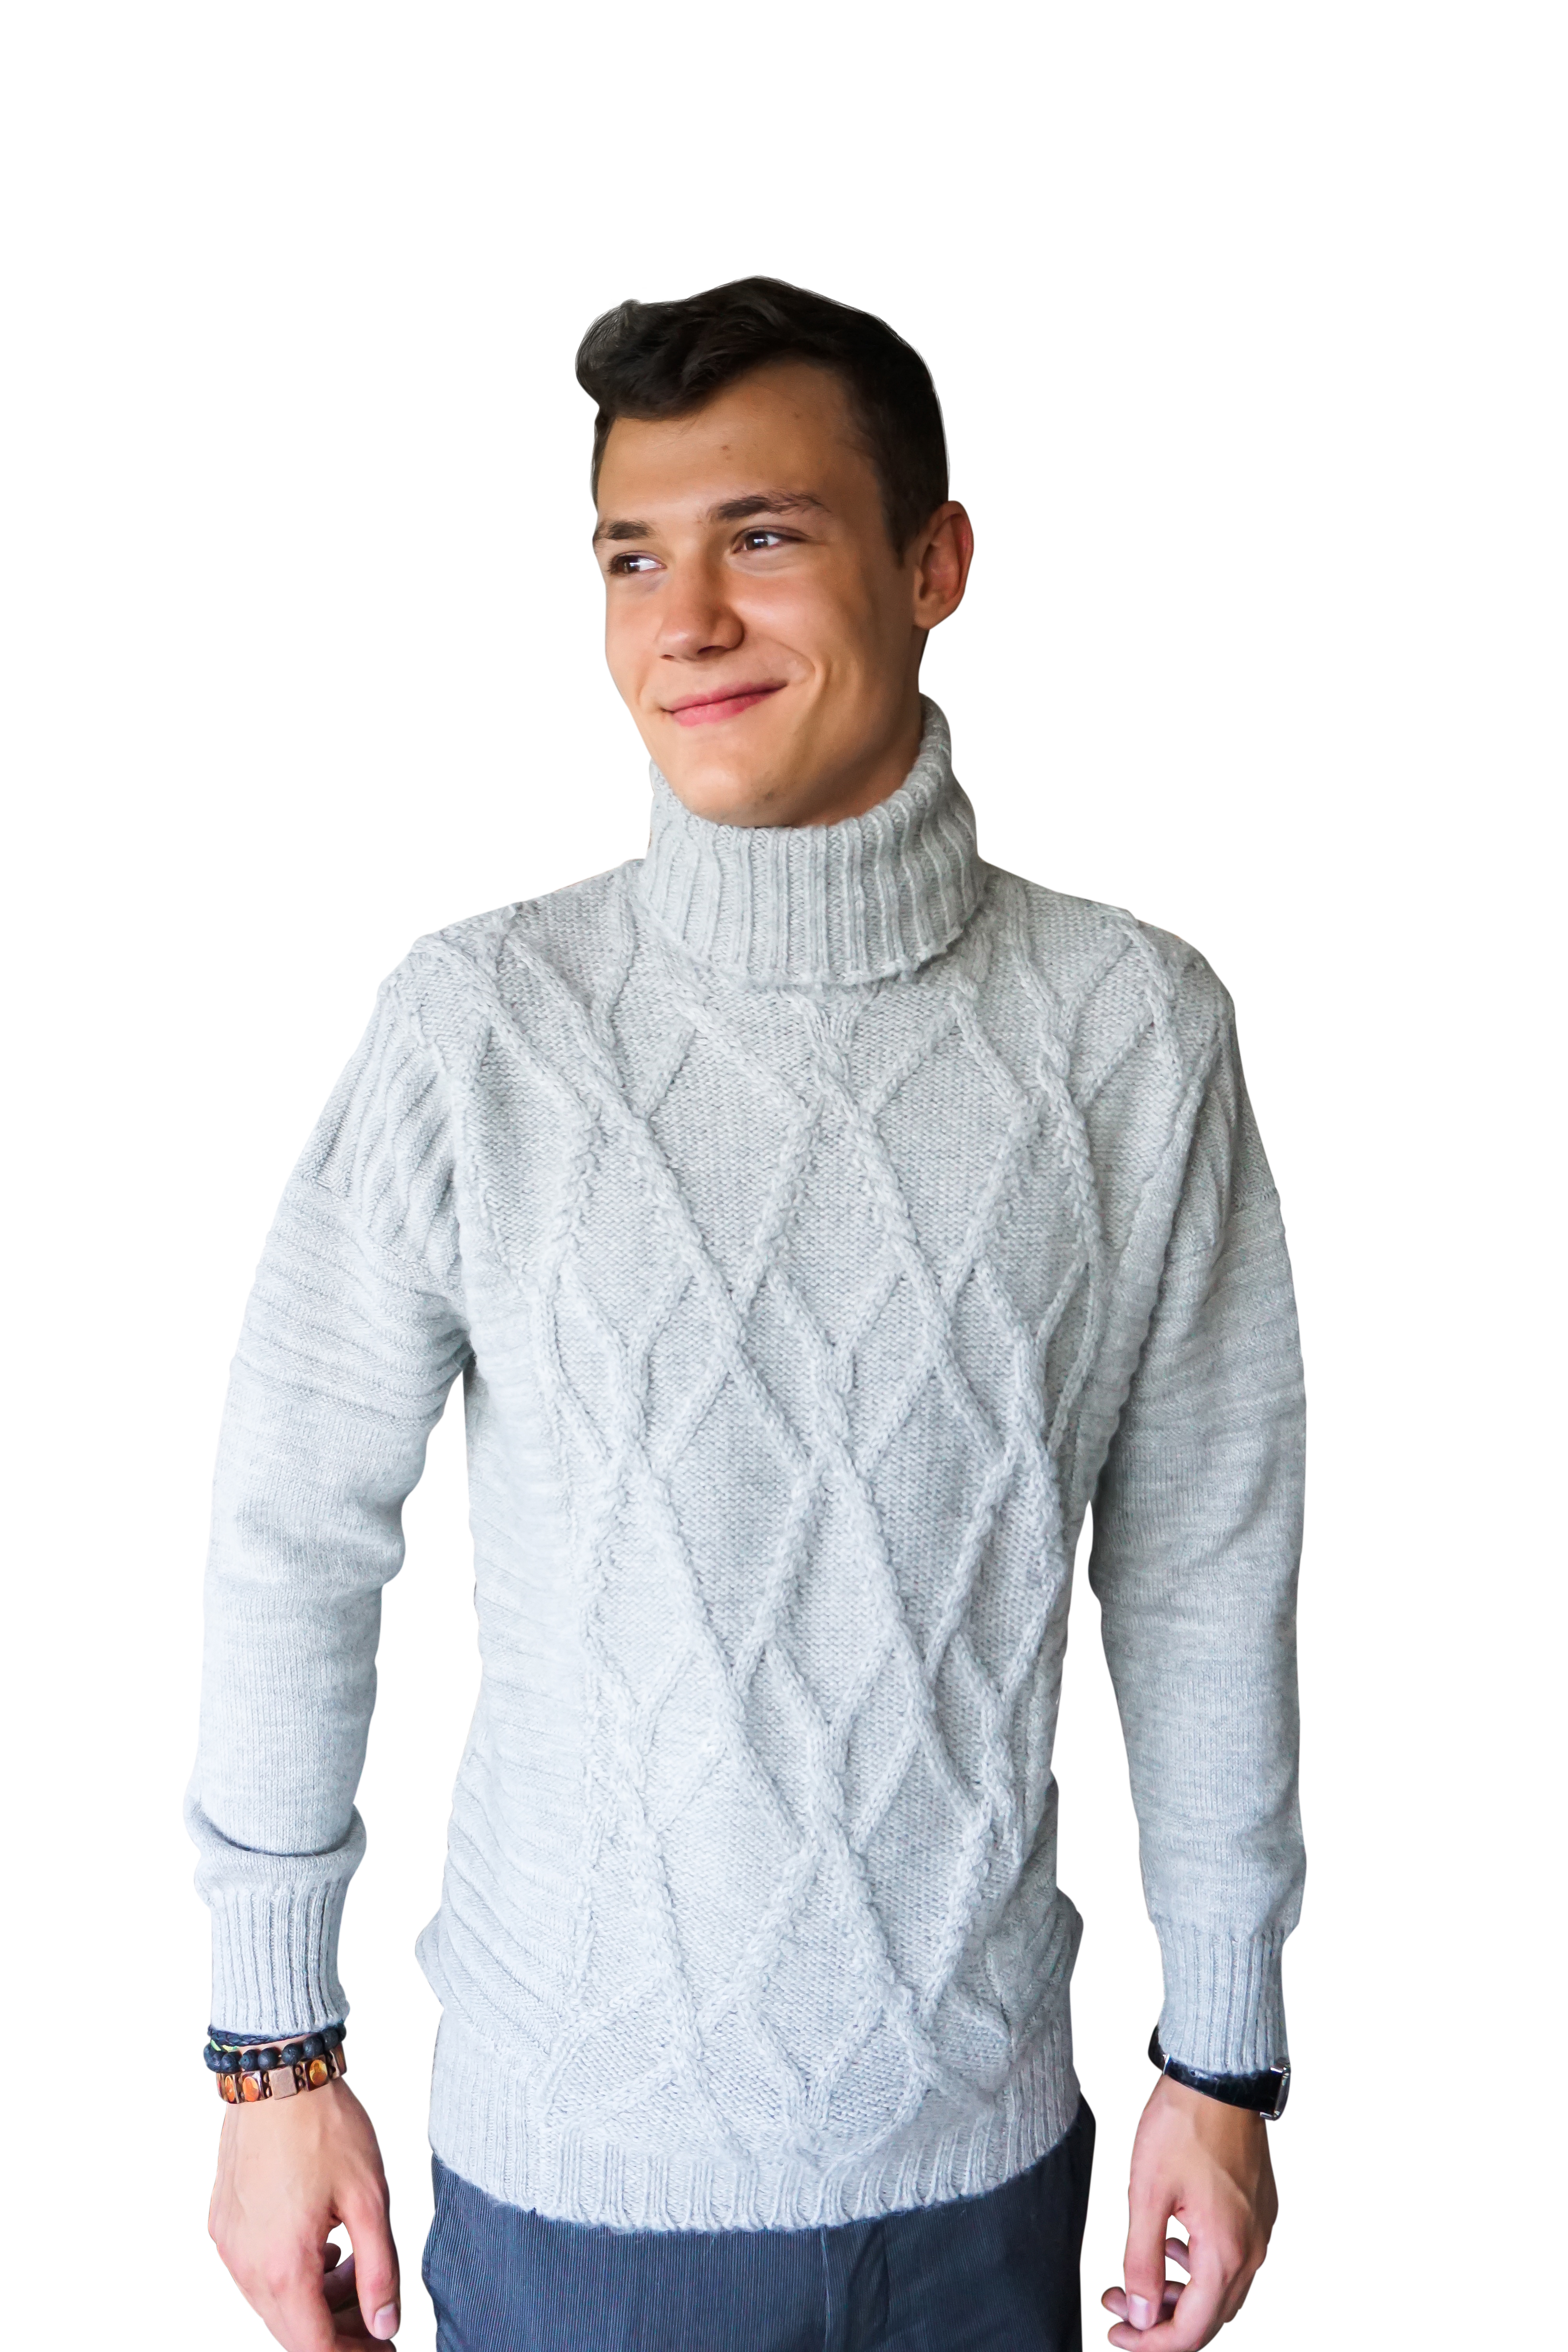 Men\'s Cable Turtleneck Sweater in Pure Baby Alpaca